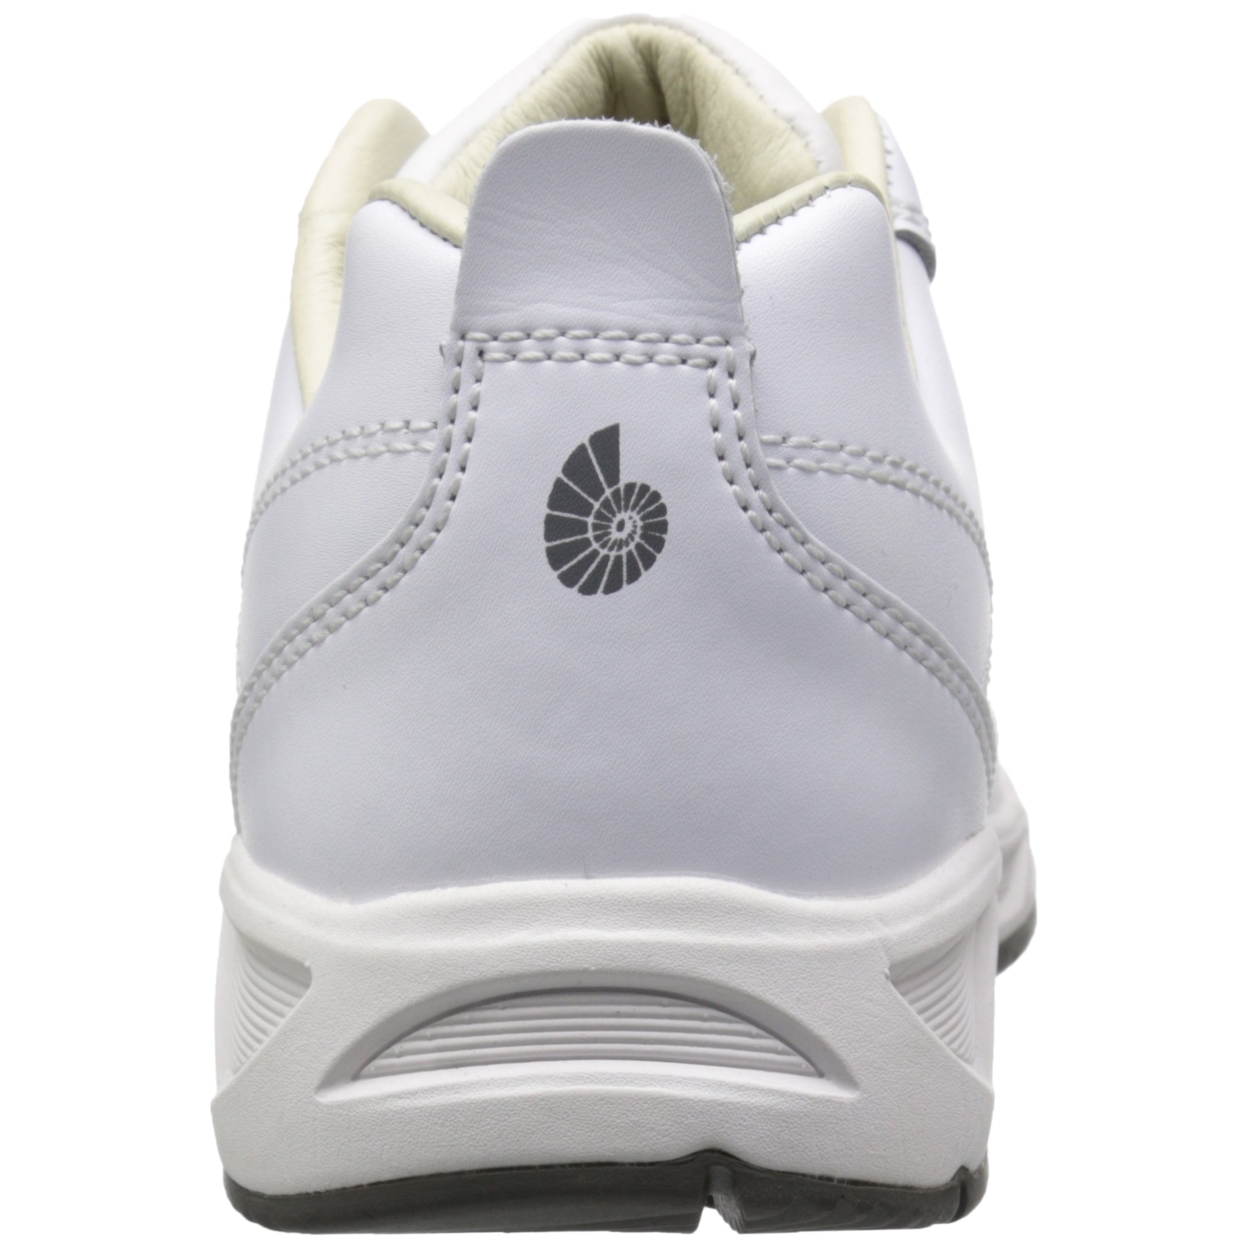 FSI FOOTWEAR SPECIALTIES INTERNATIONAL NAUTILUS Nautilus 4046 ESD No Exposed Metal Soft Toe Clean Room Athletic Shoe WHITE - WHITE, 8-M